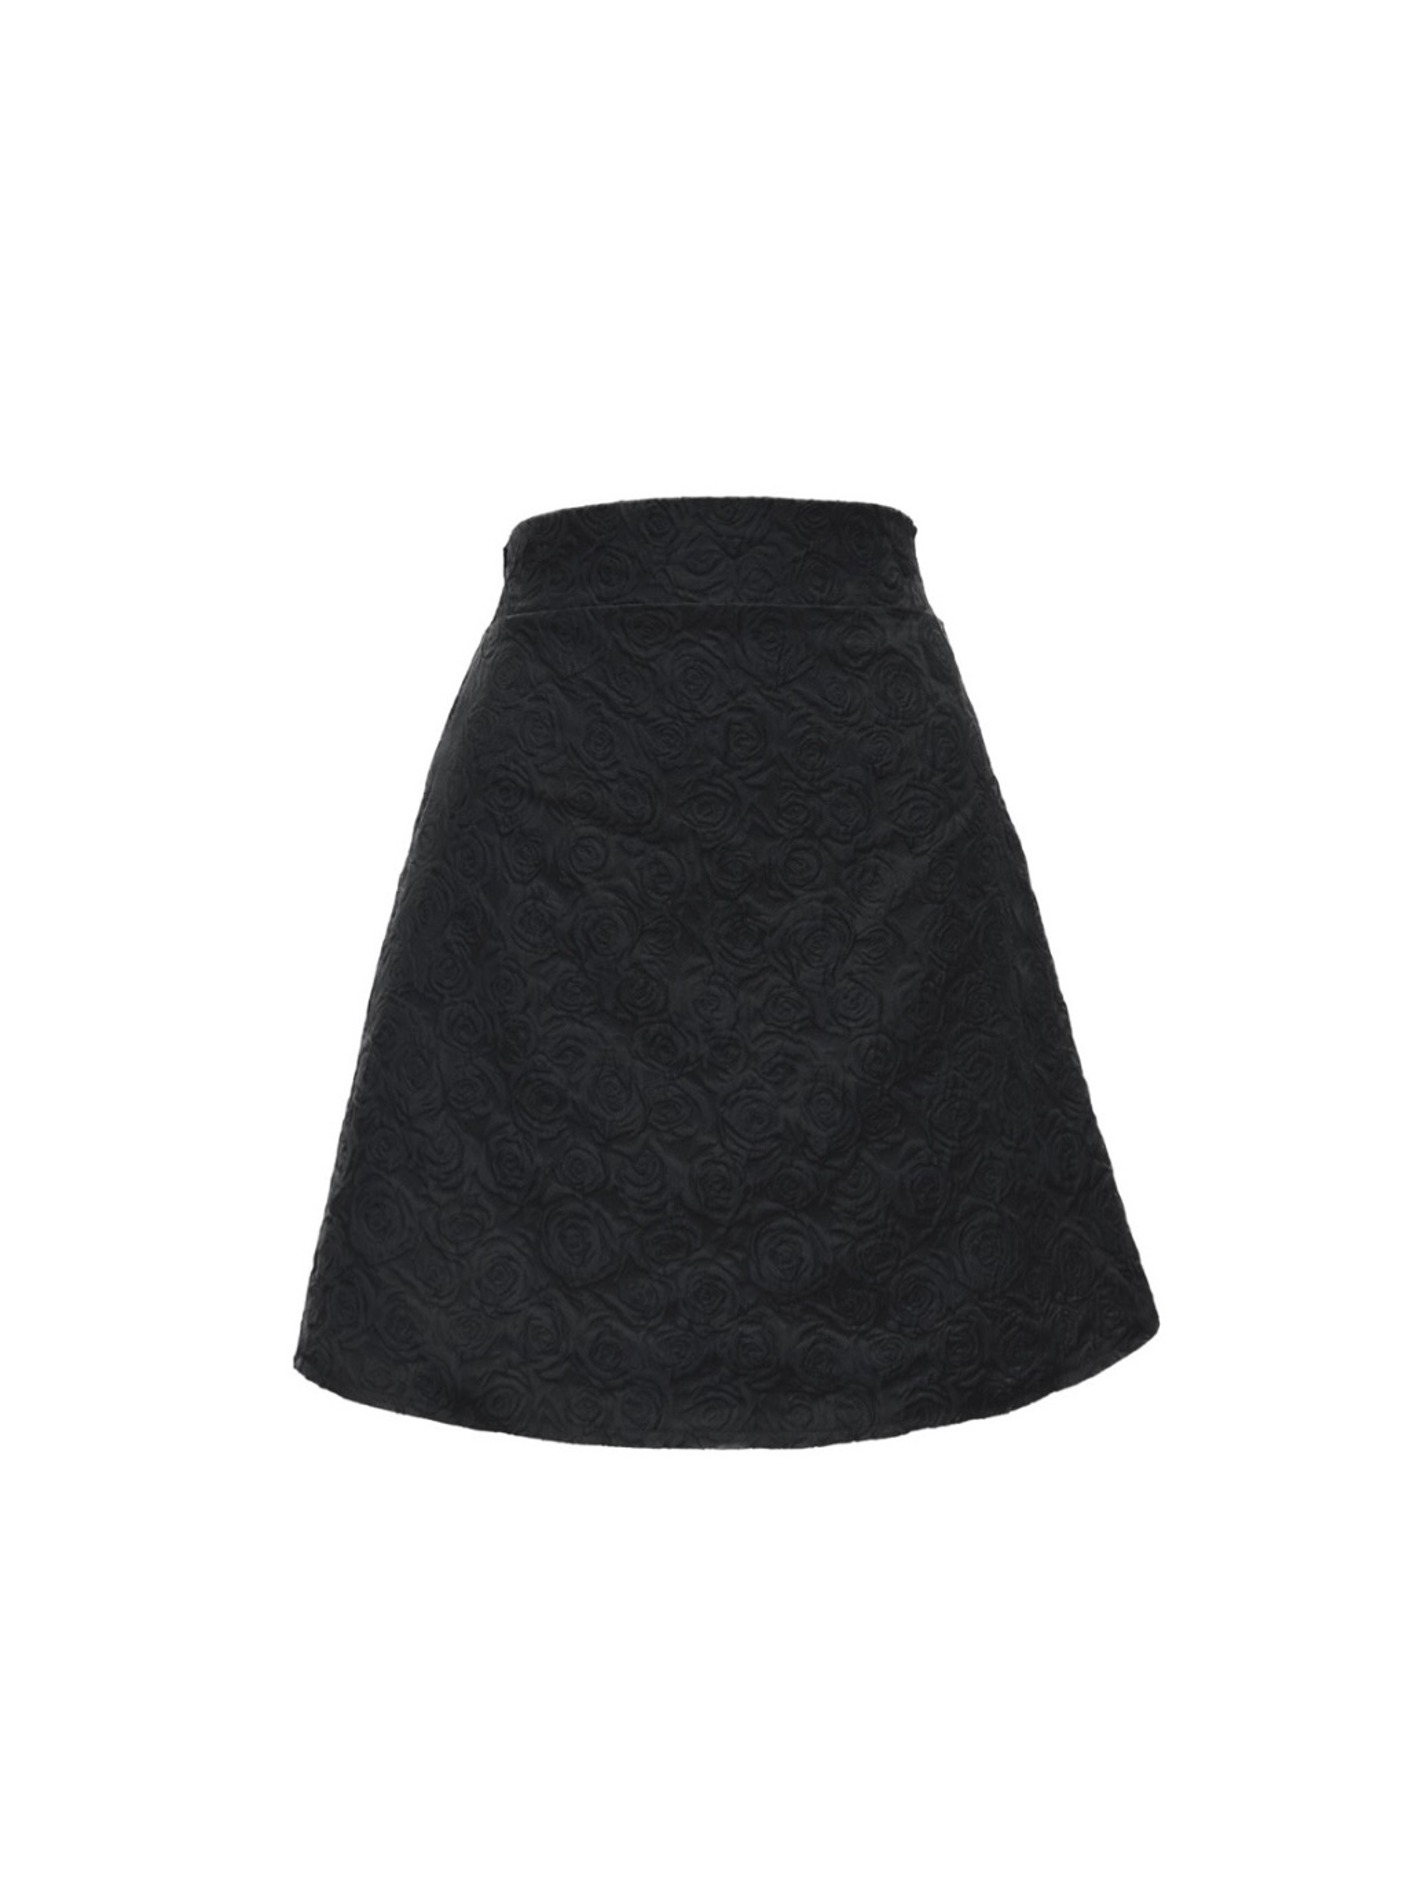 dry rose skirt (2color)